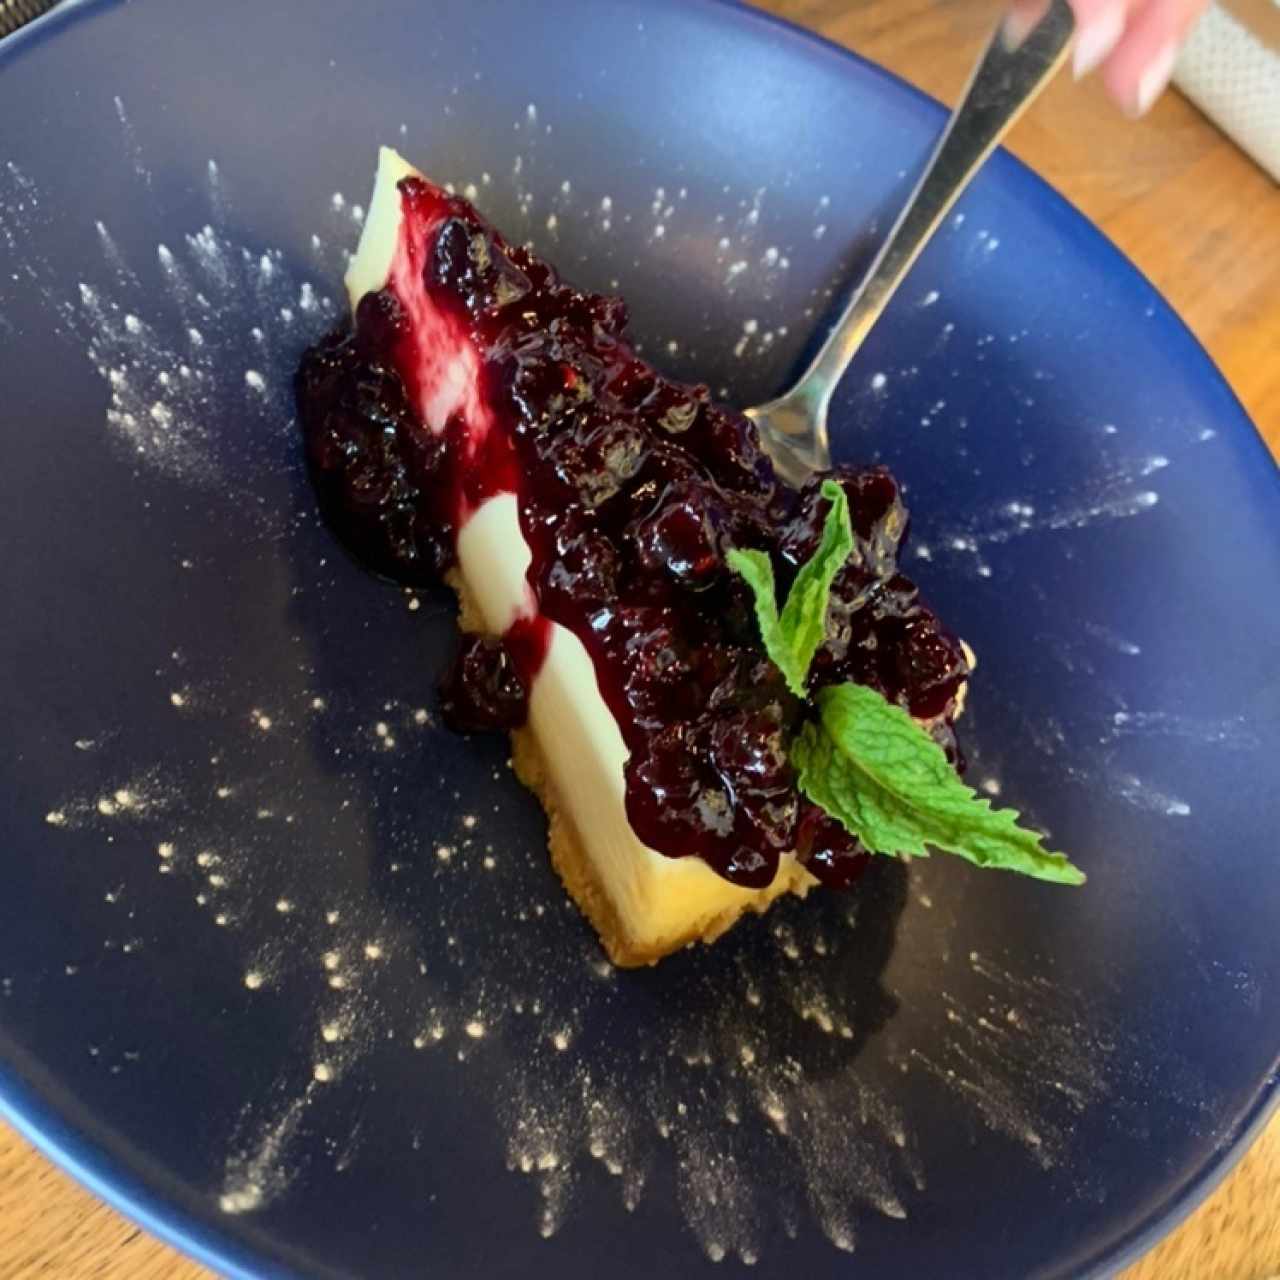 Cheesecake Ligero con Coulis de Frutos Rojos